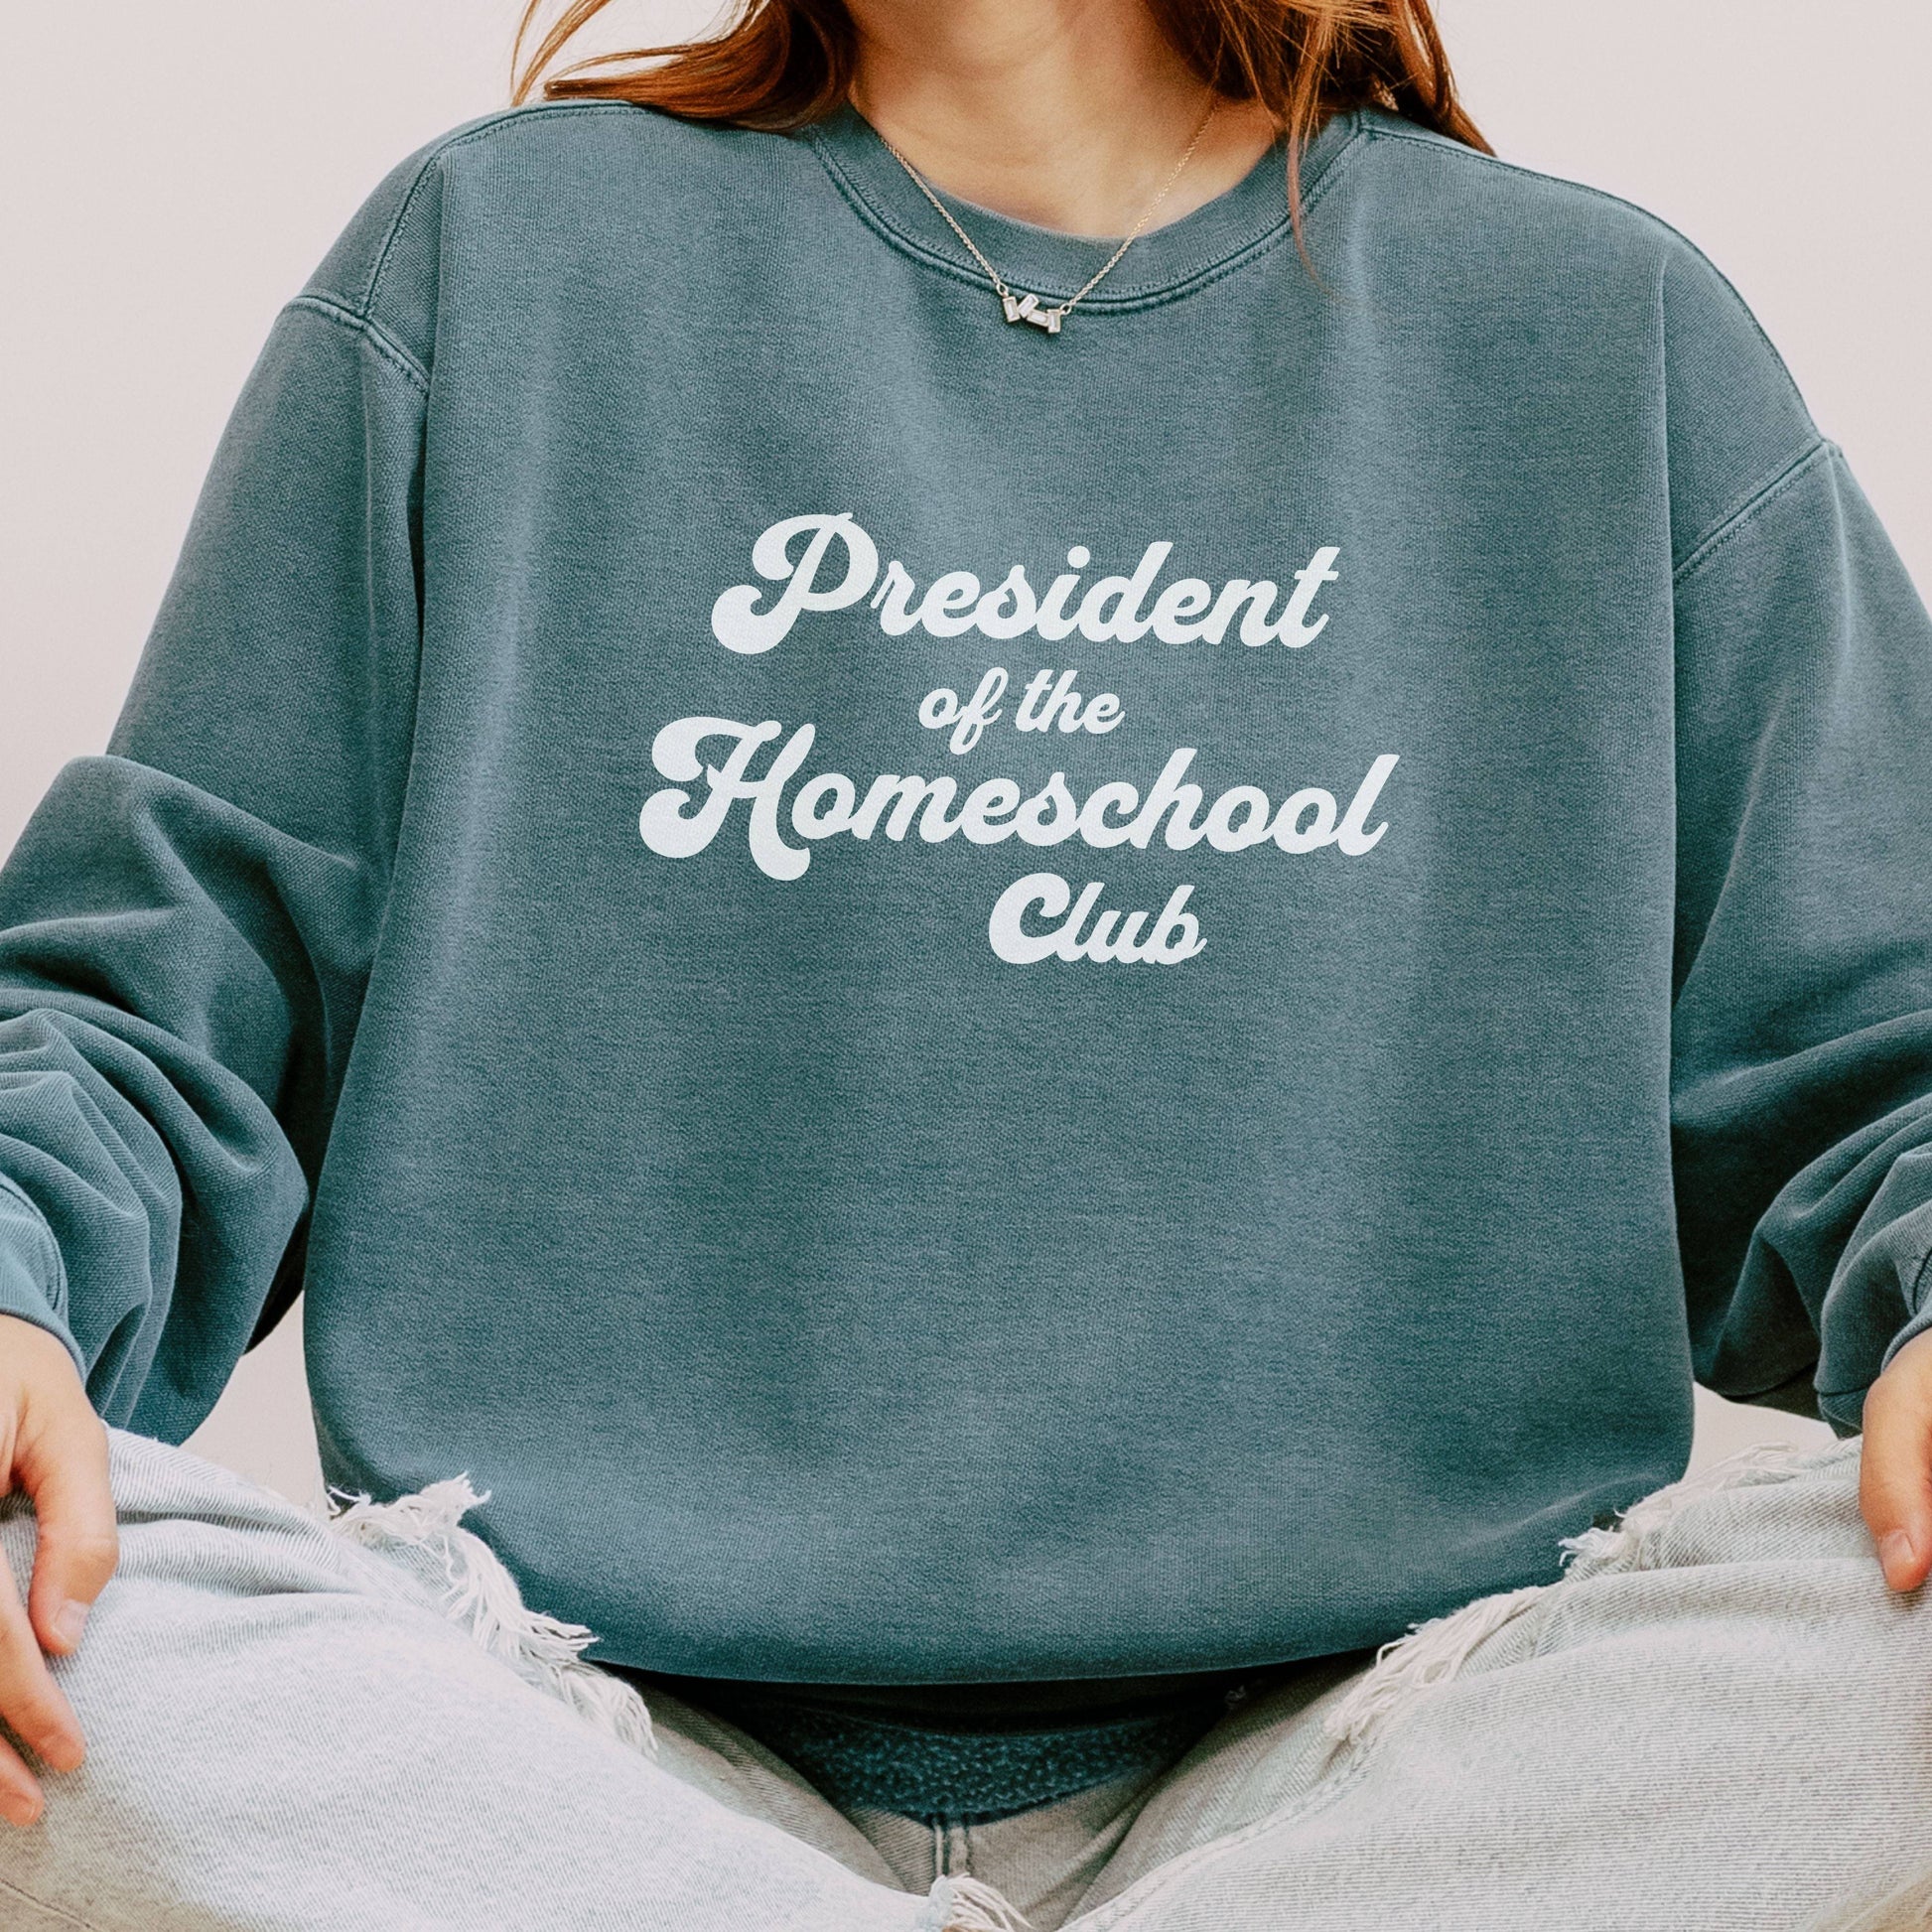 President of the Homeschool Club Sweatshirt for Mom and Dad